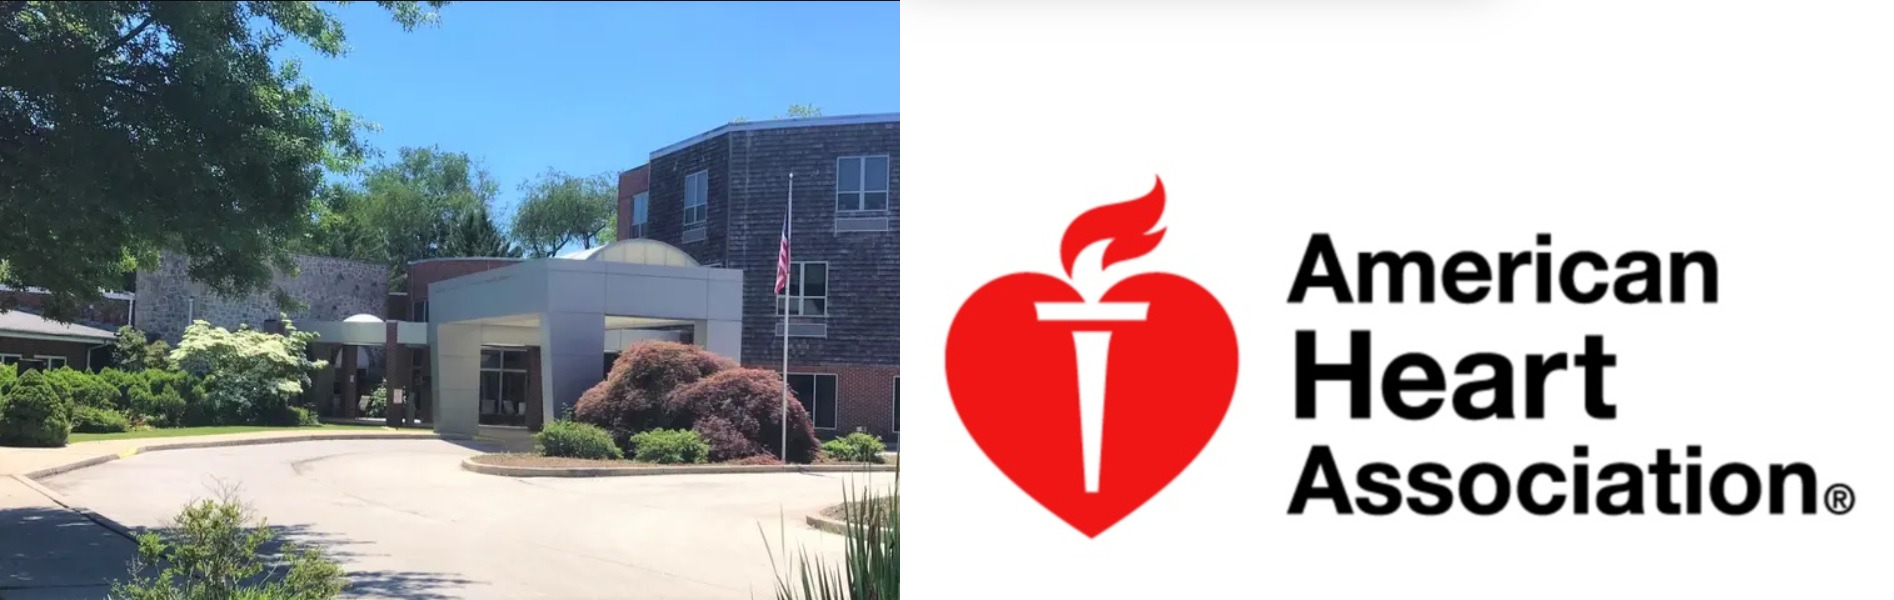 springfield earns american heart association certification